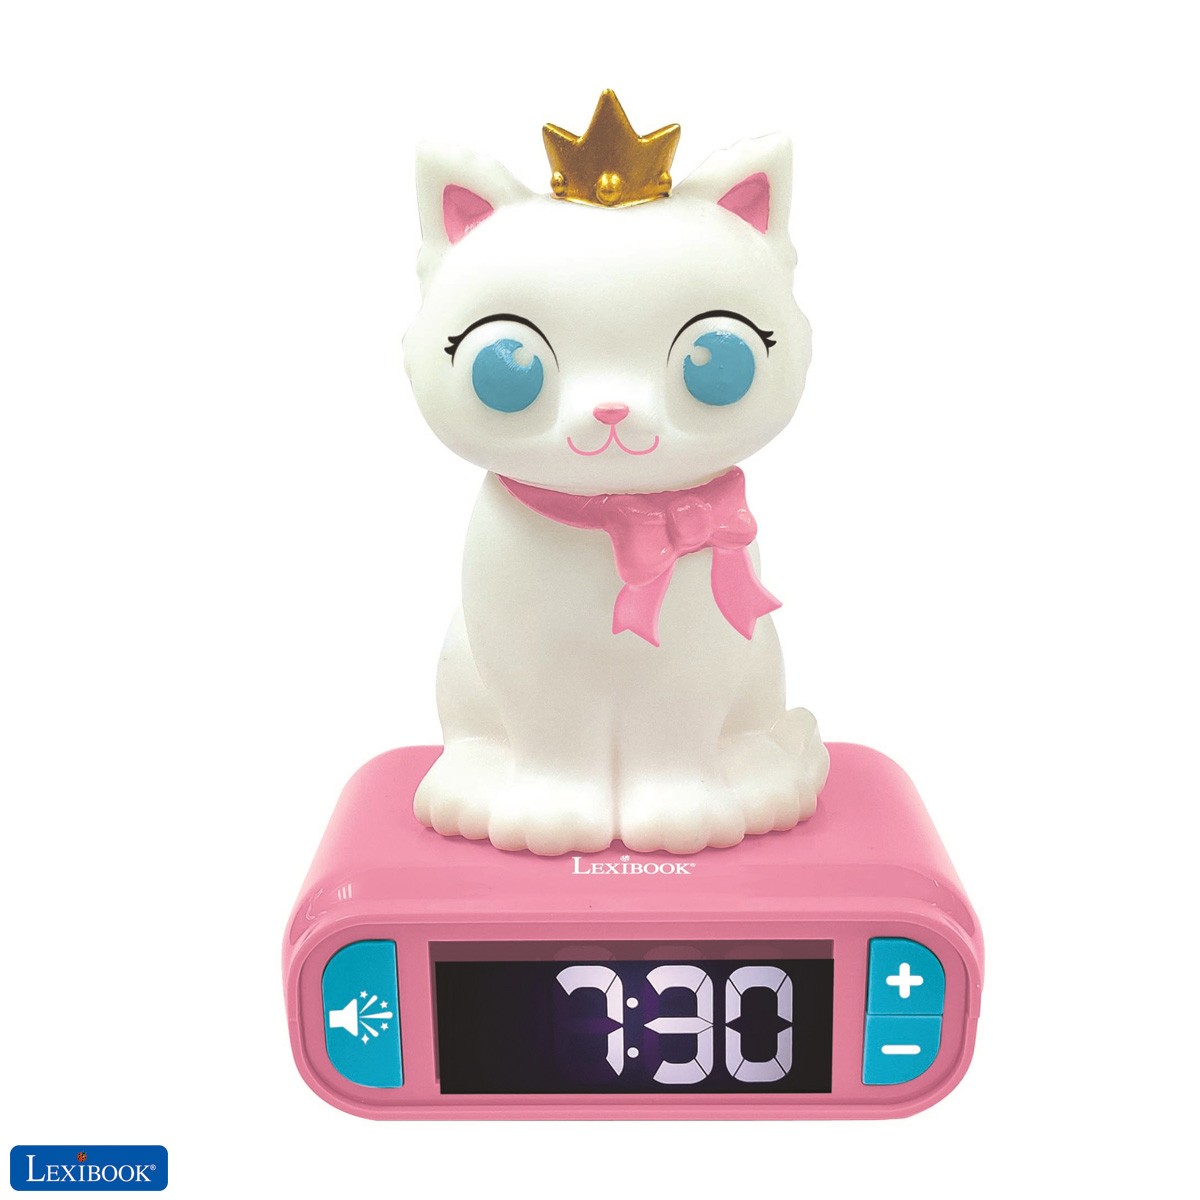 Kitten Digital Alarm Clock for kids with Night Light Snooze